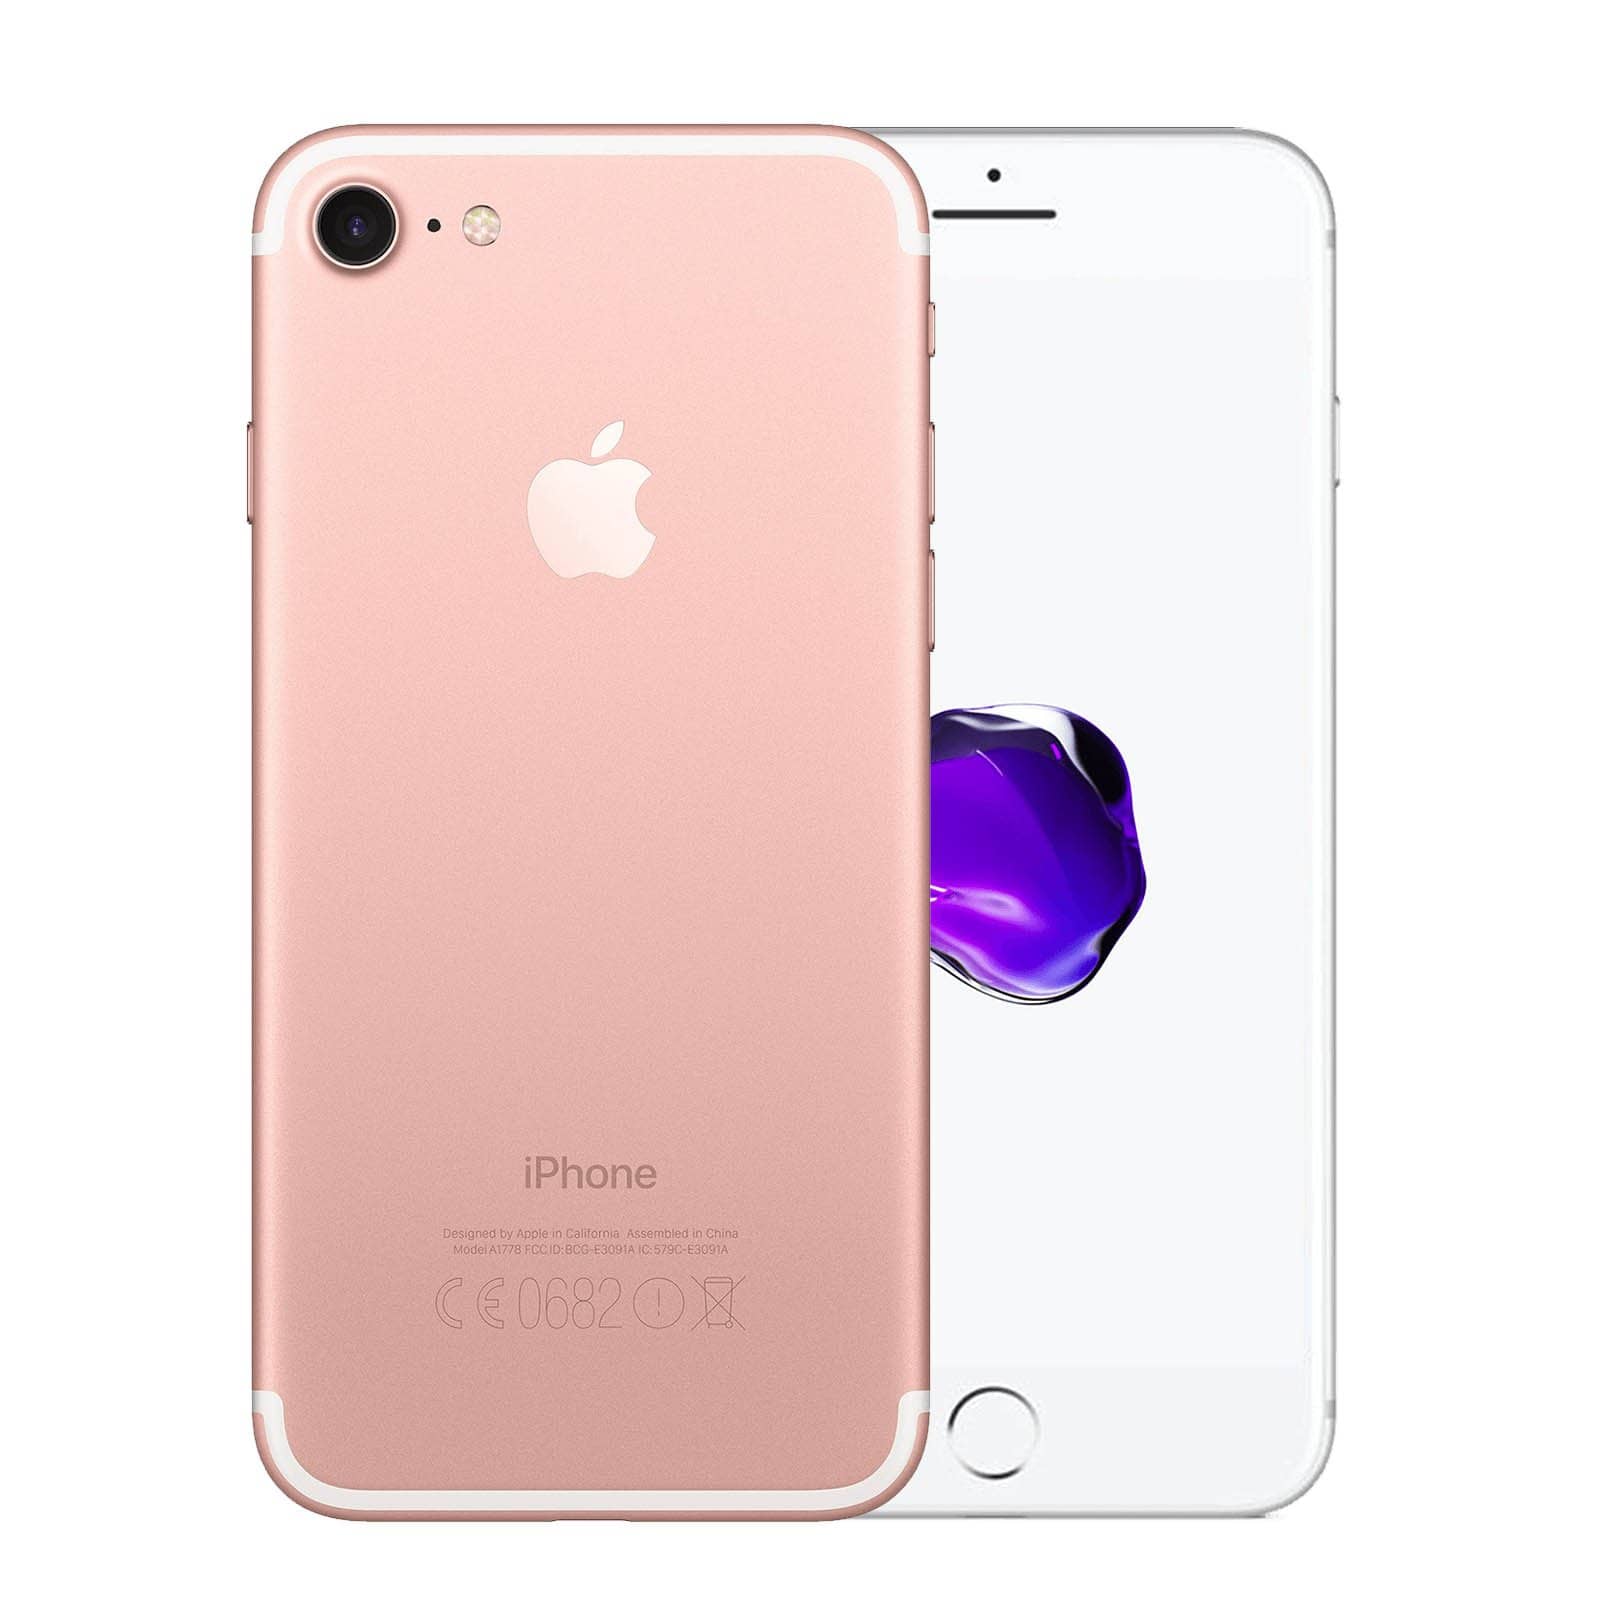 Apple iPhone 7 128GB Rose Gold Pristine - Unlocked 128GB Rose Gold Pristine